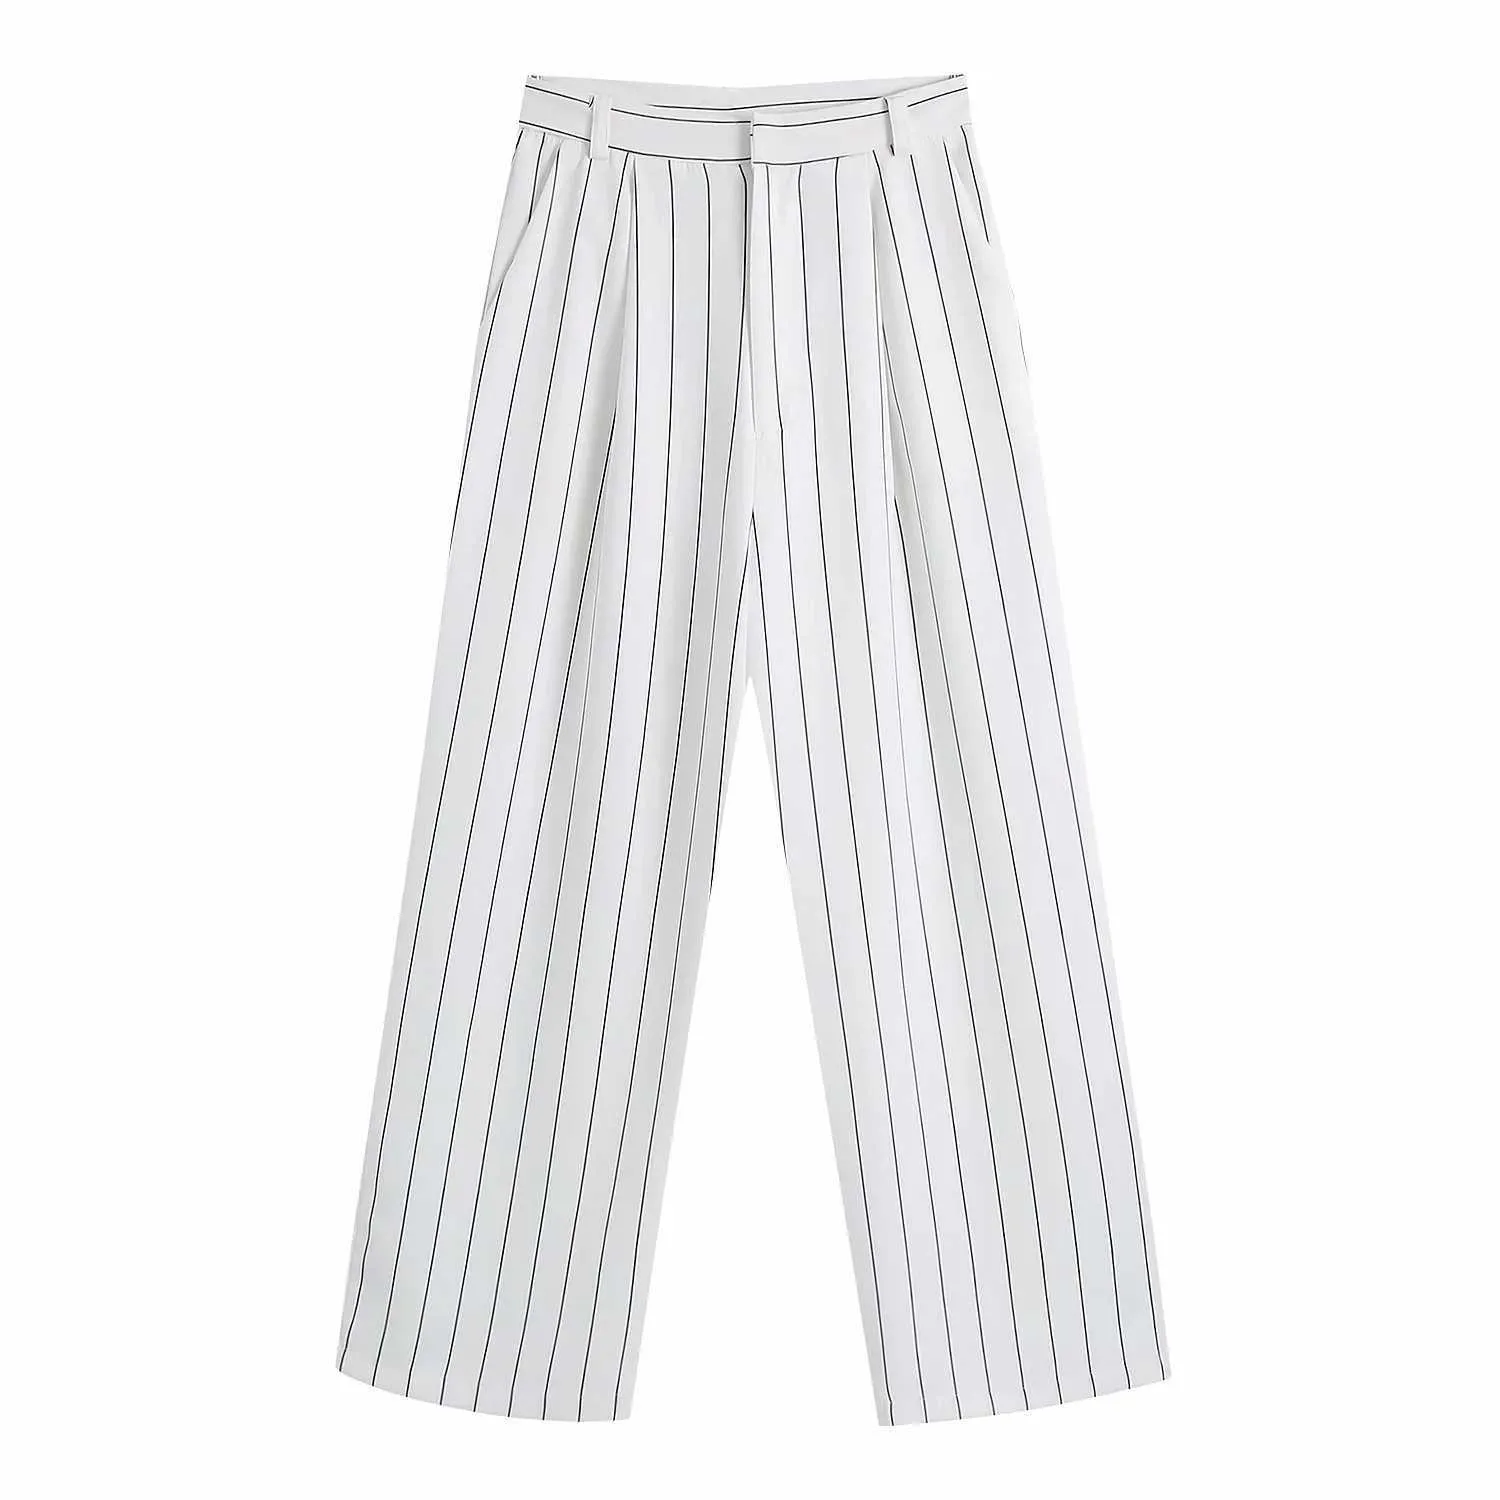 ZA Mulheres Moda Branco Dupla Breasted Blazers Casaco Vintage Stripe mangas compridas Outerwear e cintura alta calças casuais conjunto 210602